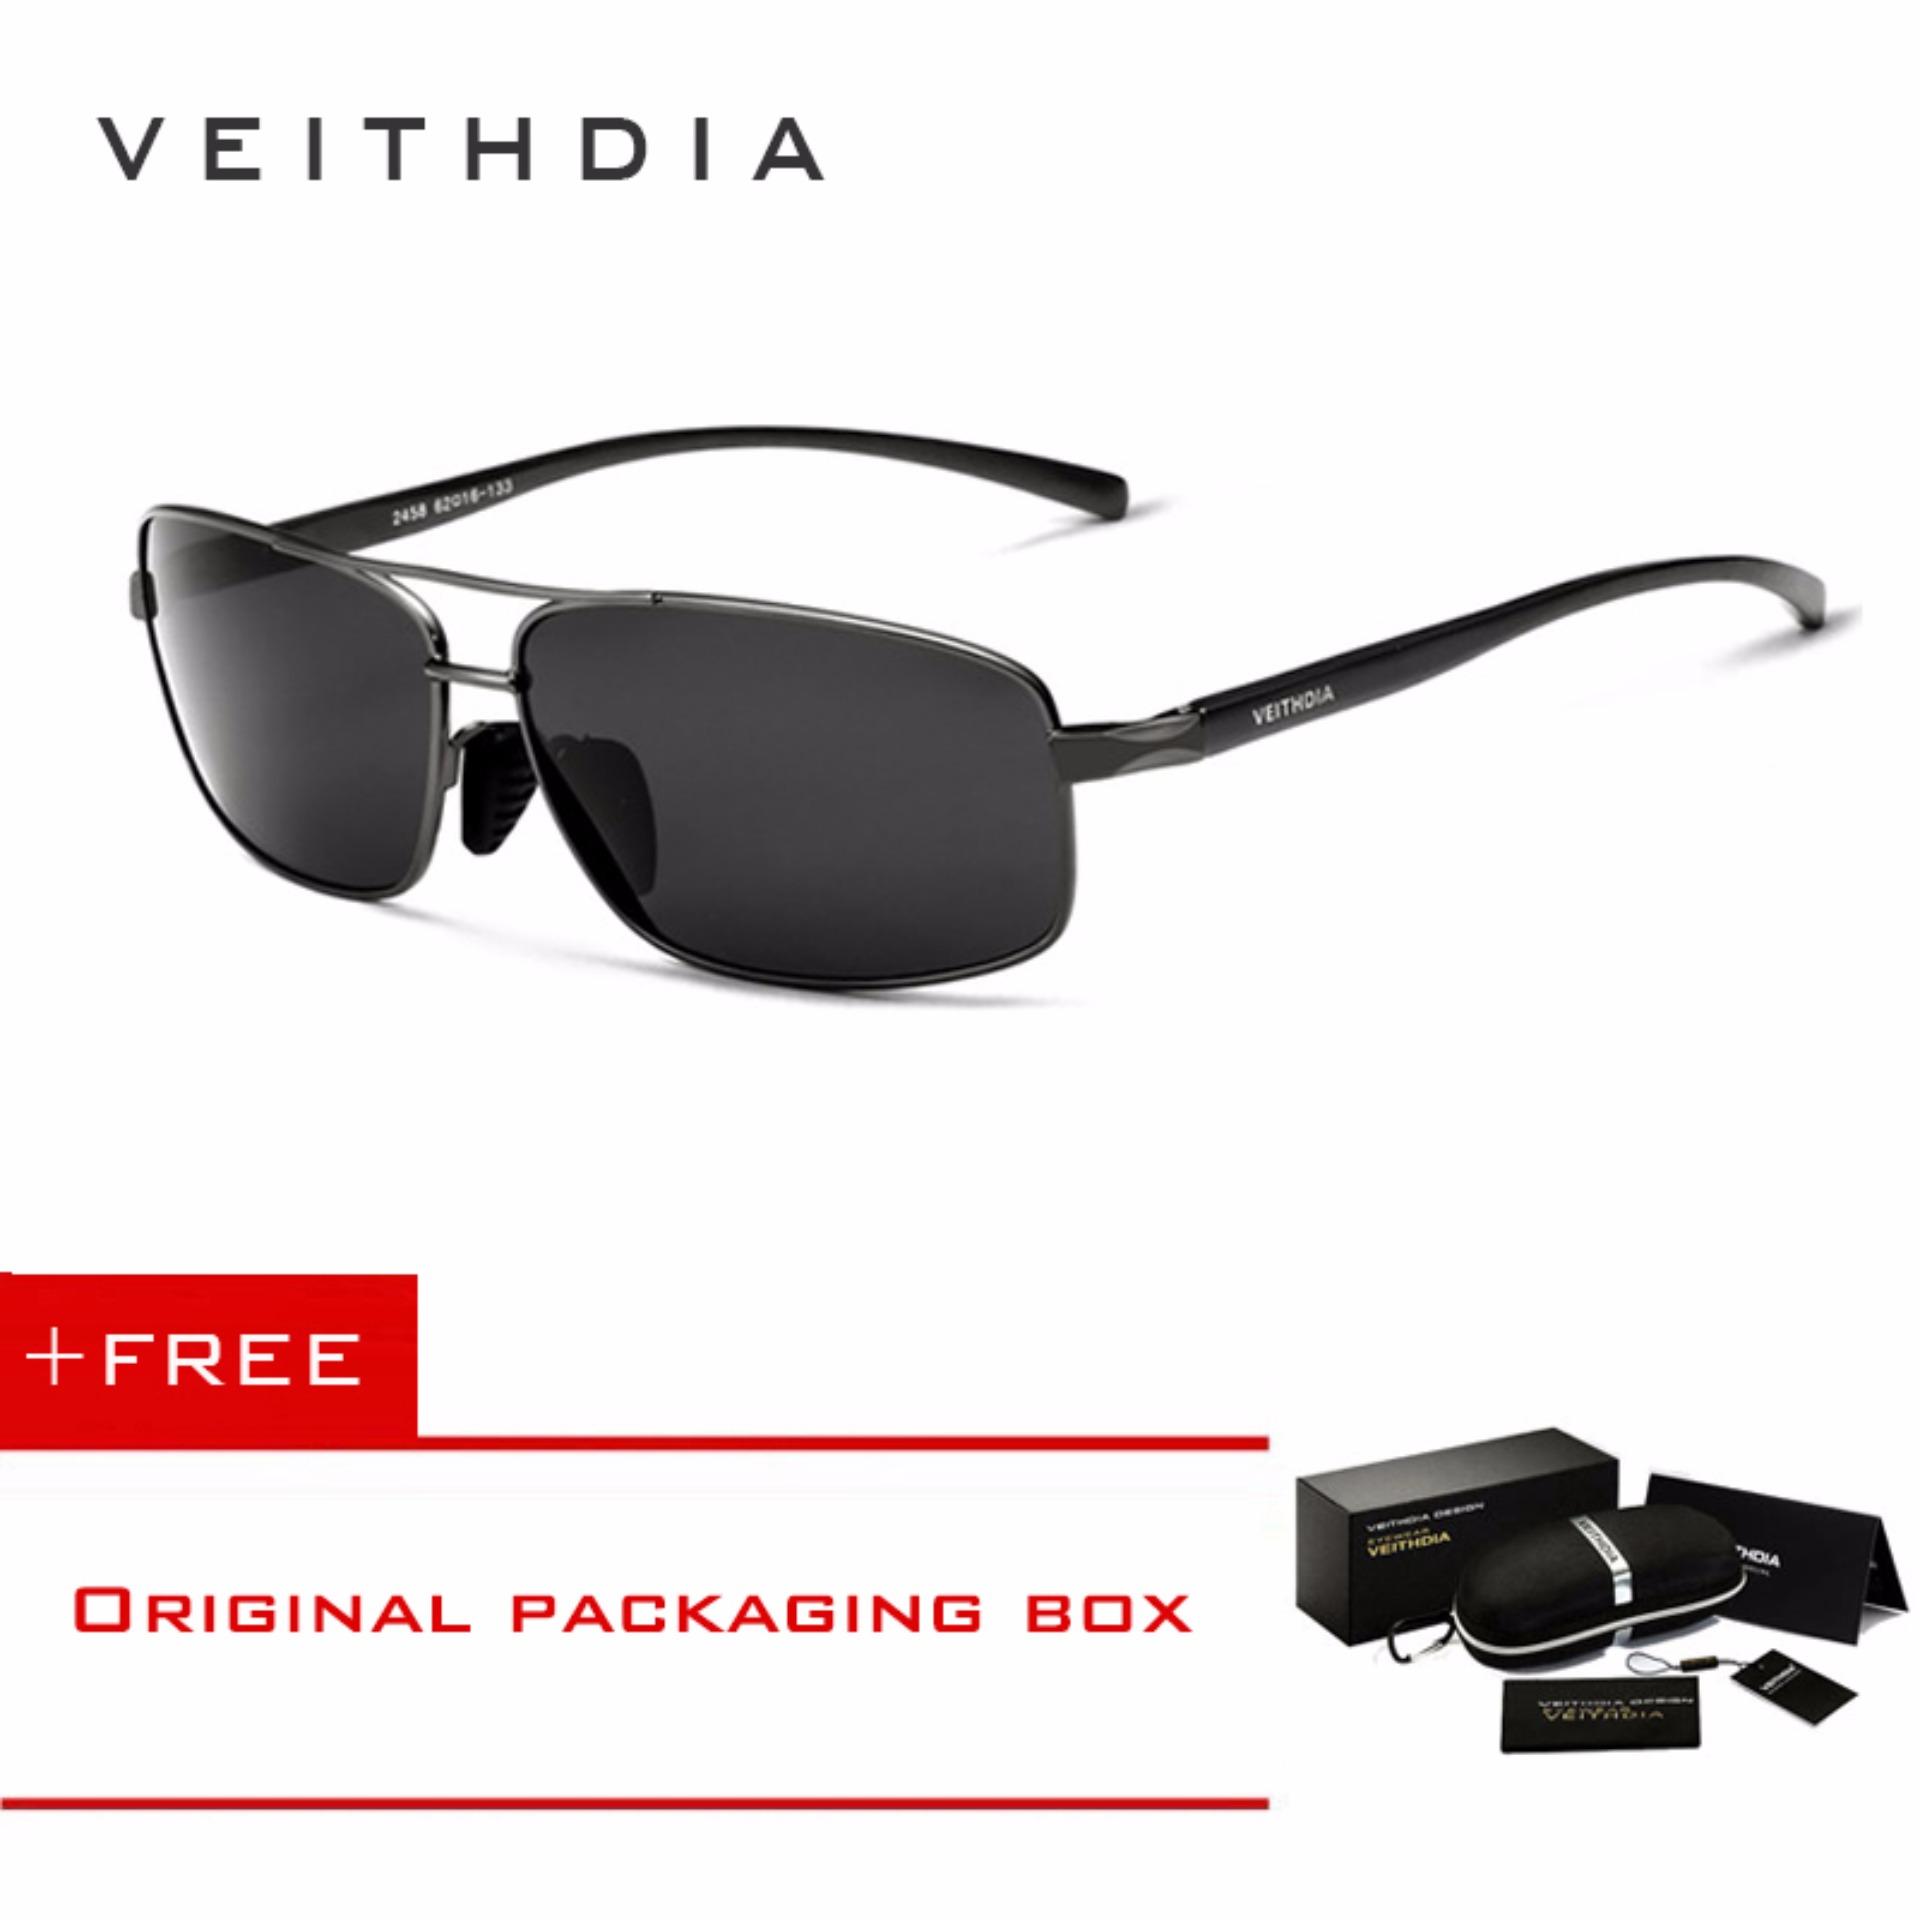 VEITHDIA Brand New Polarized Men's Sunglasses Aluminum Frame Sun Glasses Driving Eyewear Accessories For Men oculos de sol masculino 2458(Black)